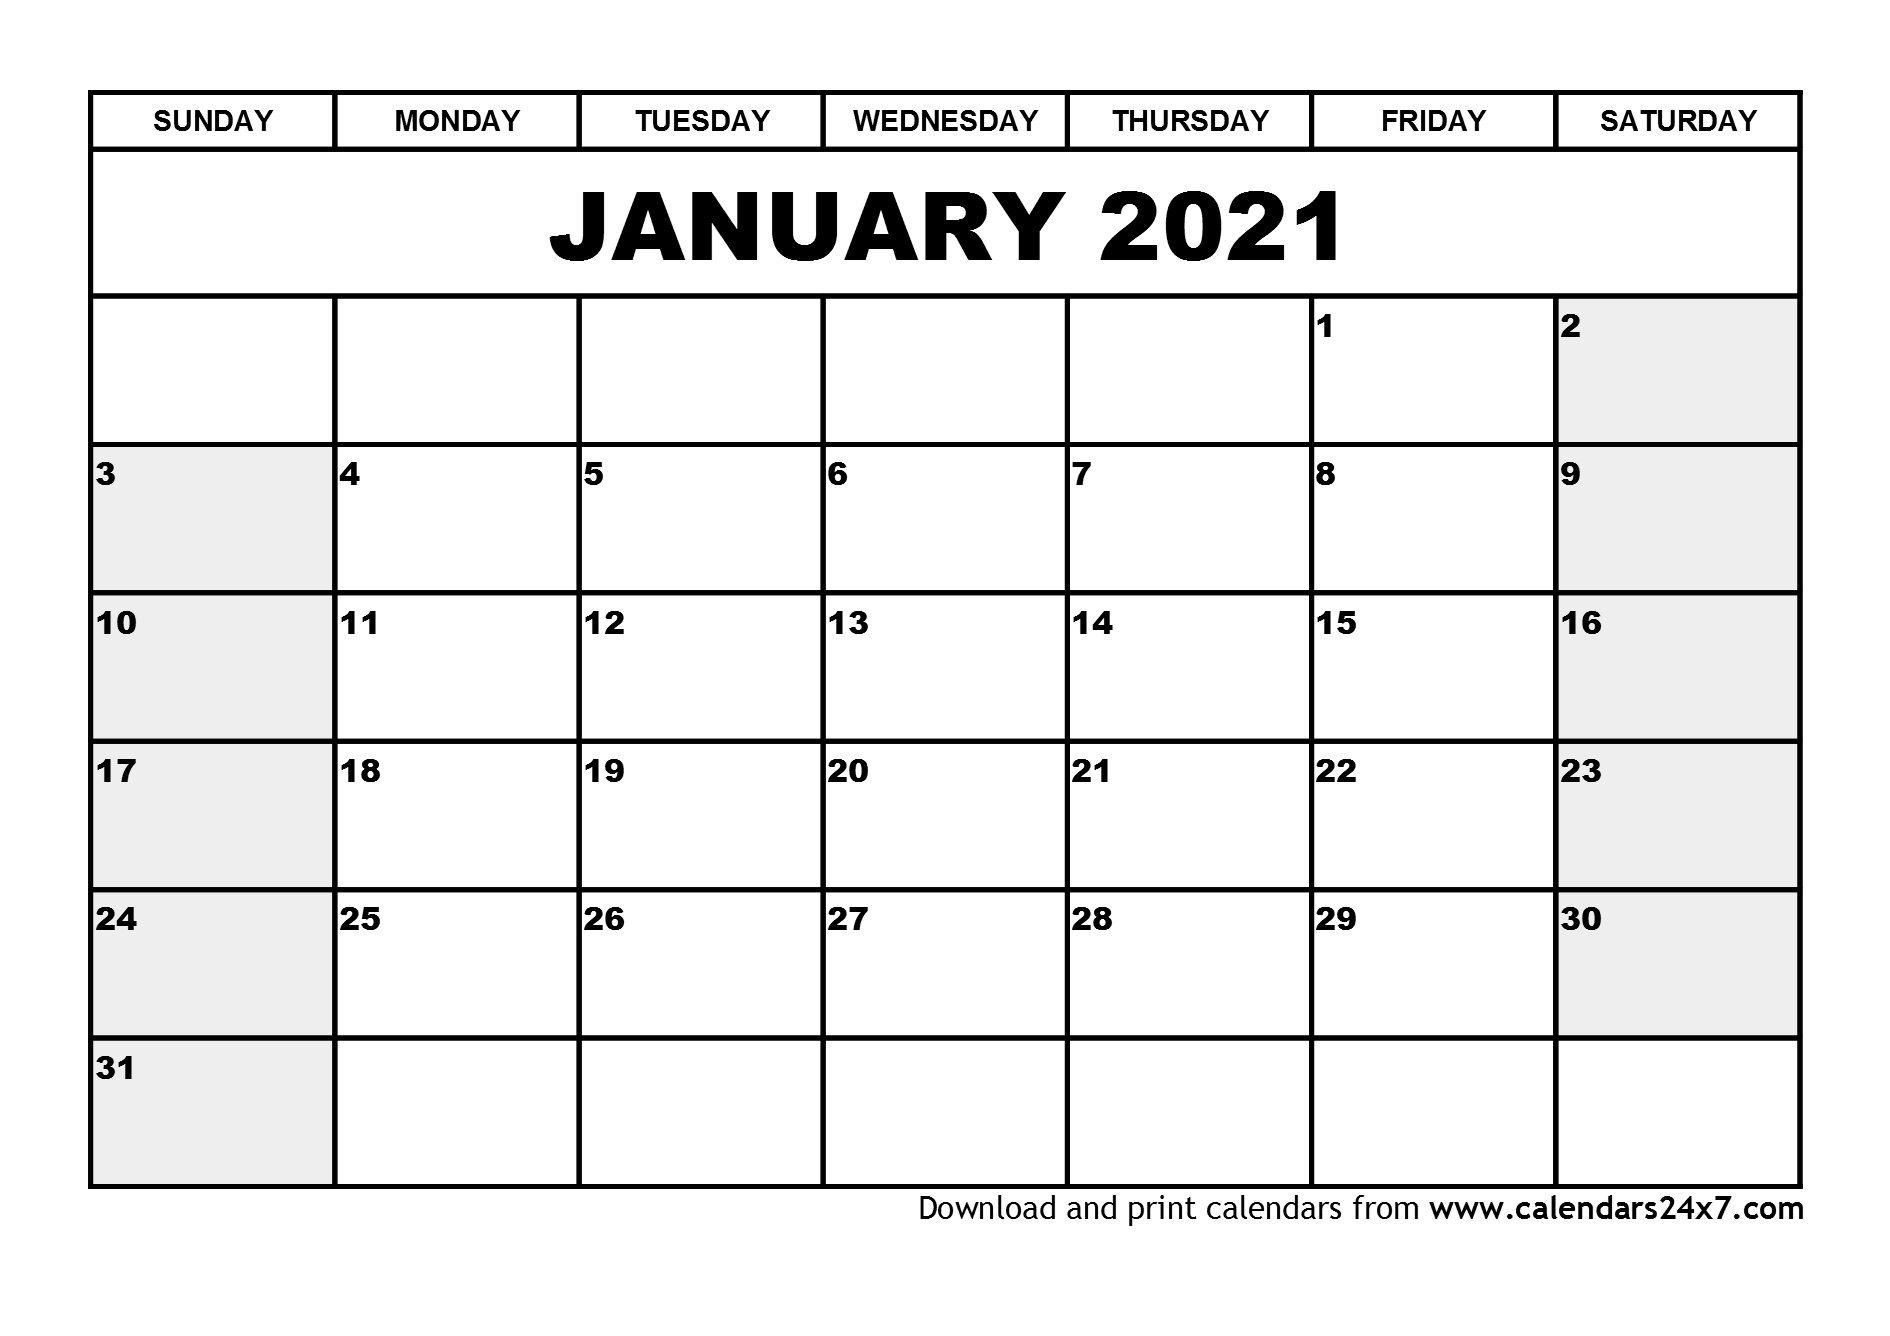 January 2021 Calendar February 2021 Calendar